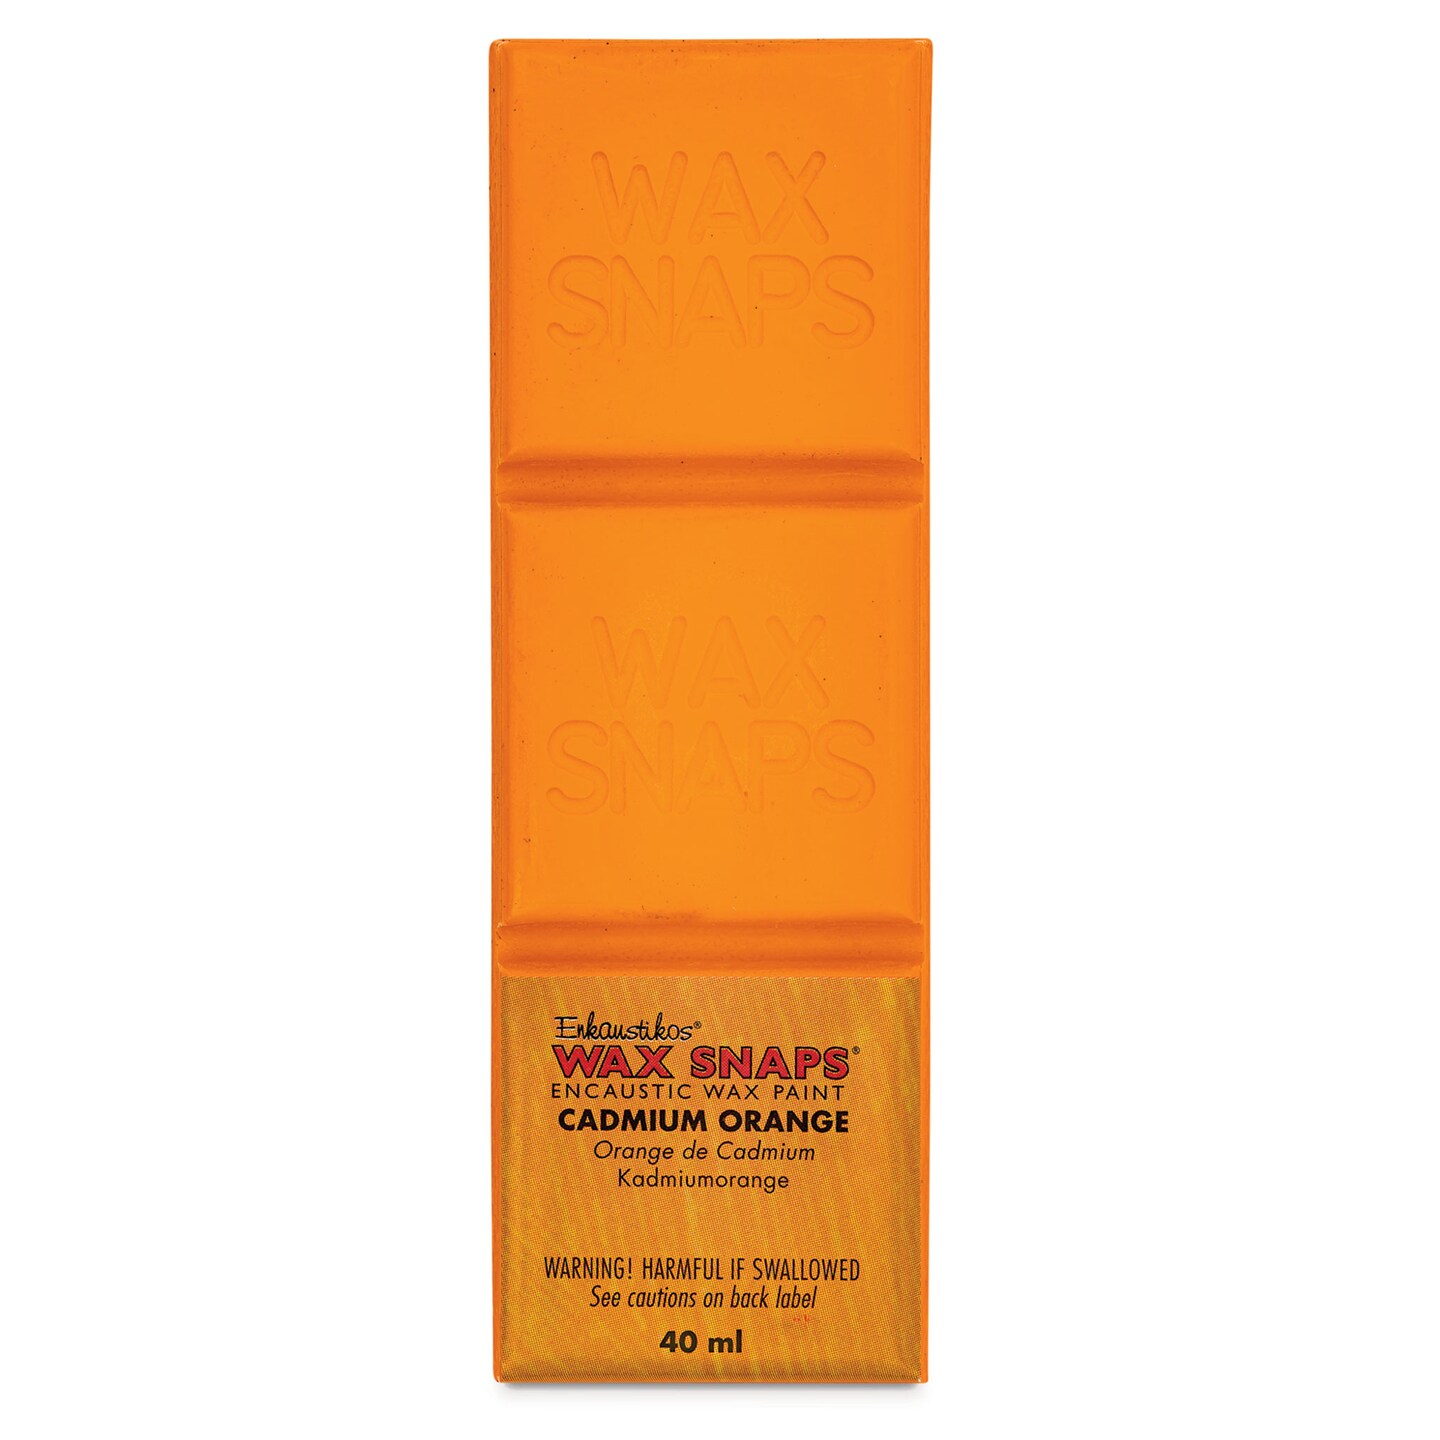 Enkaustikos Wax Snaps Encaustic Paints - Cadmium Orange, 40 ml cake